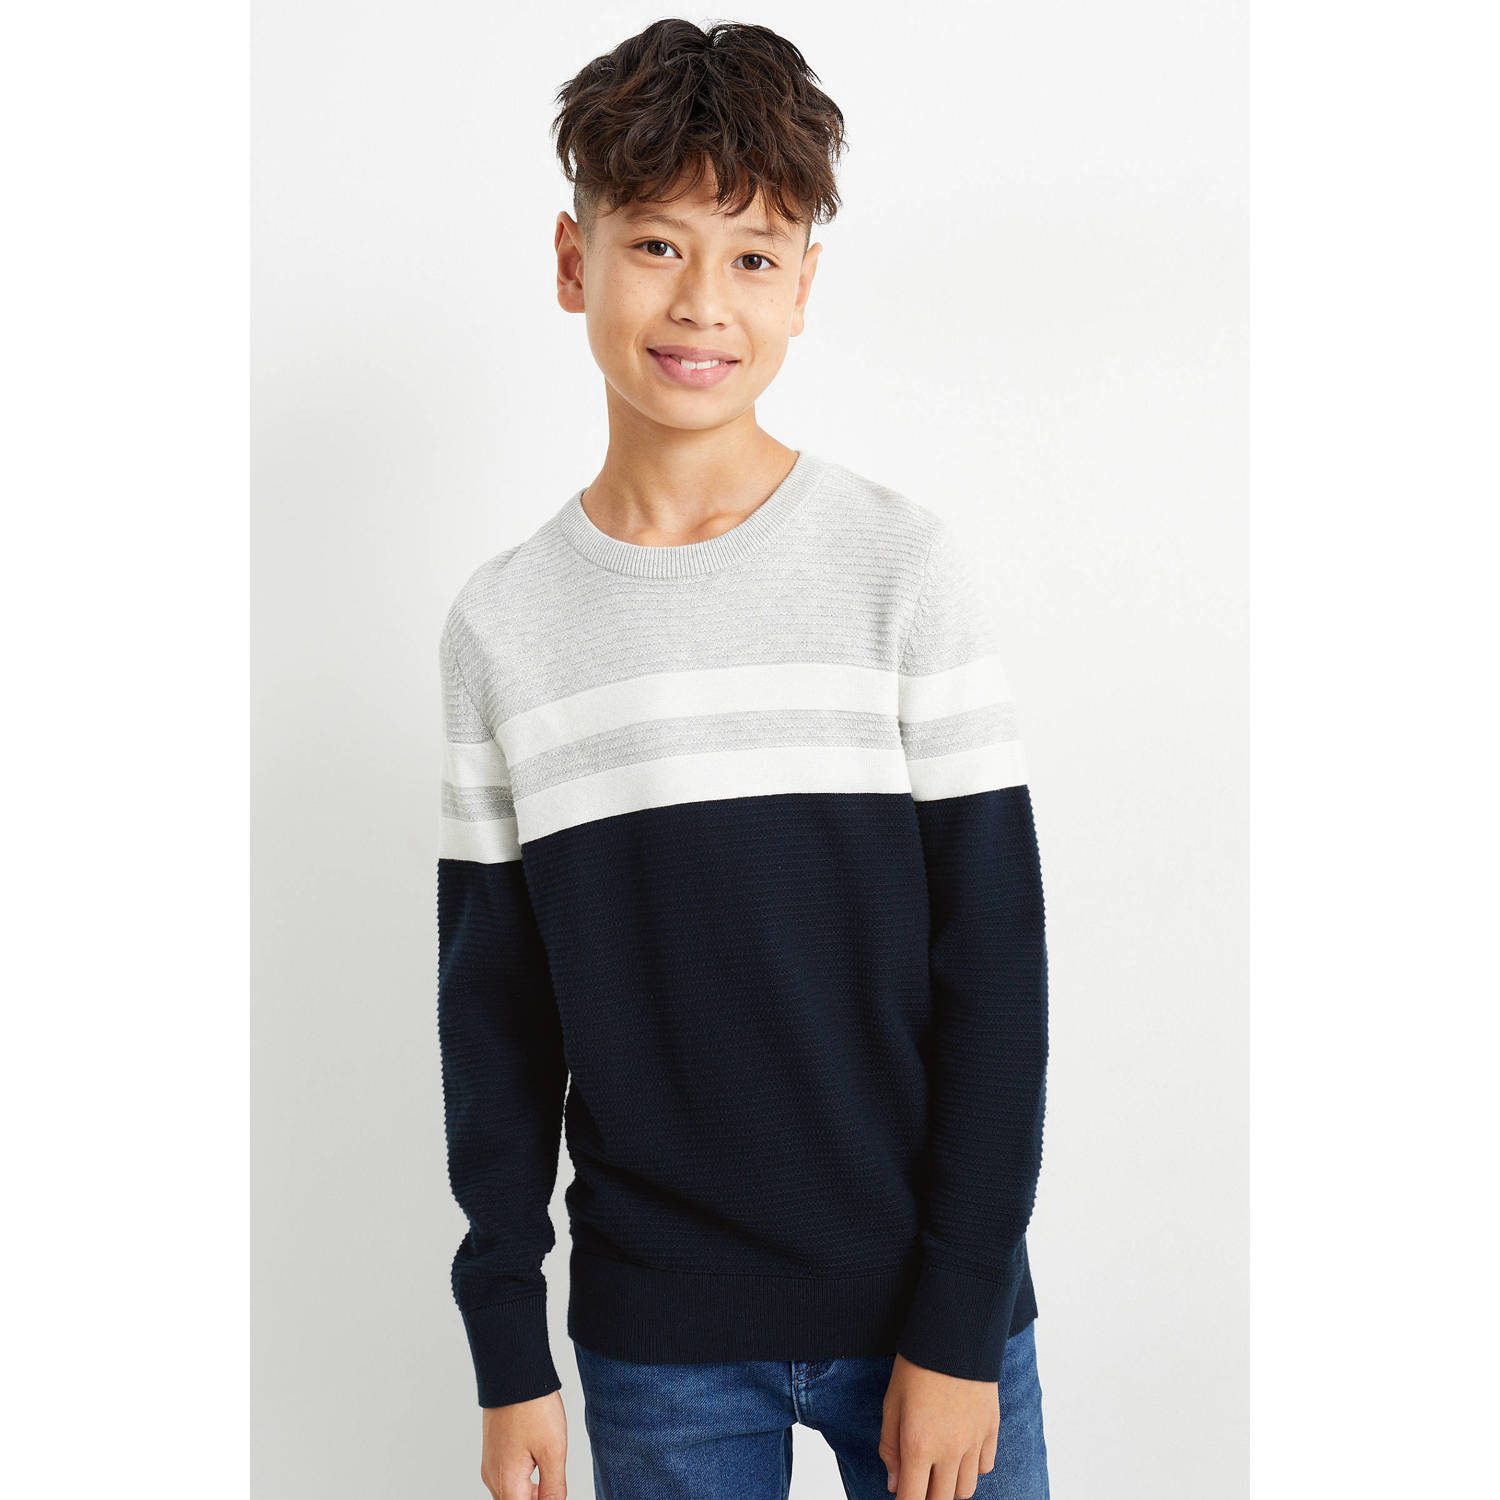 C&A sweater donkerblauw grijs wit